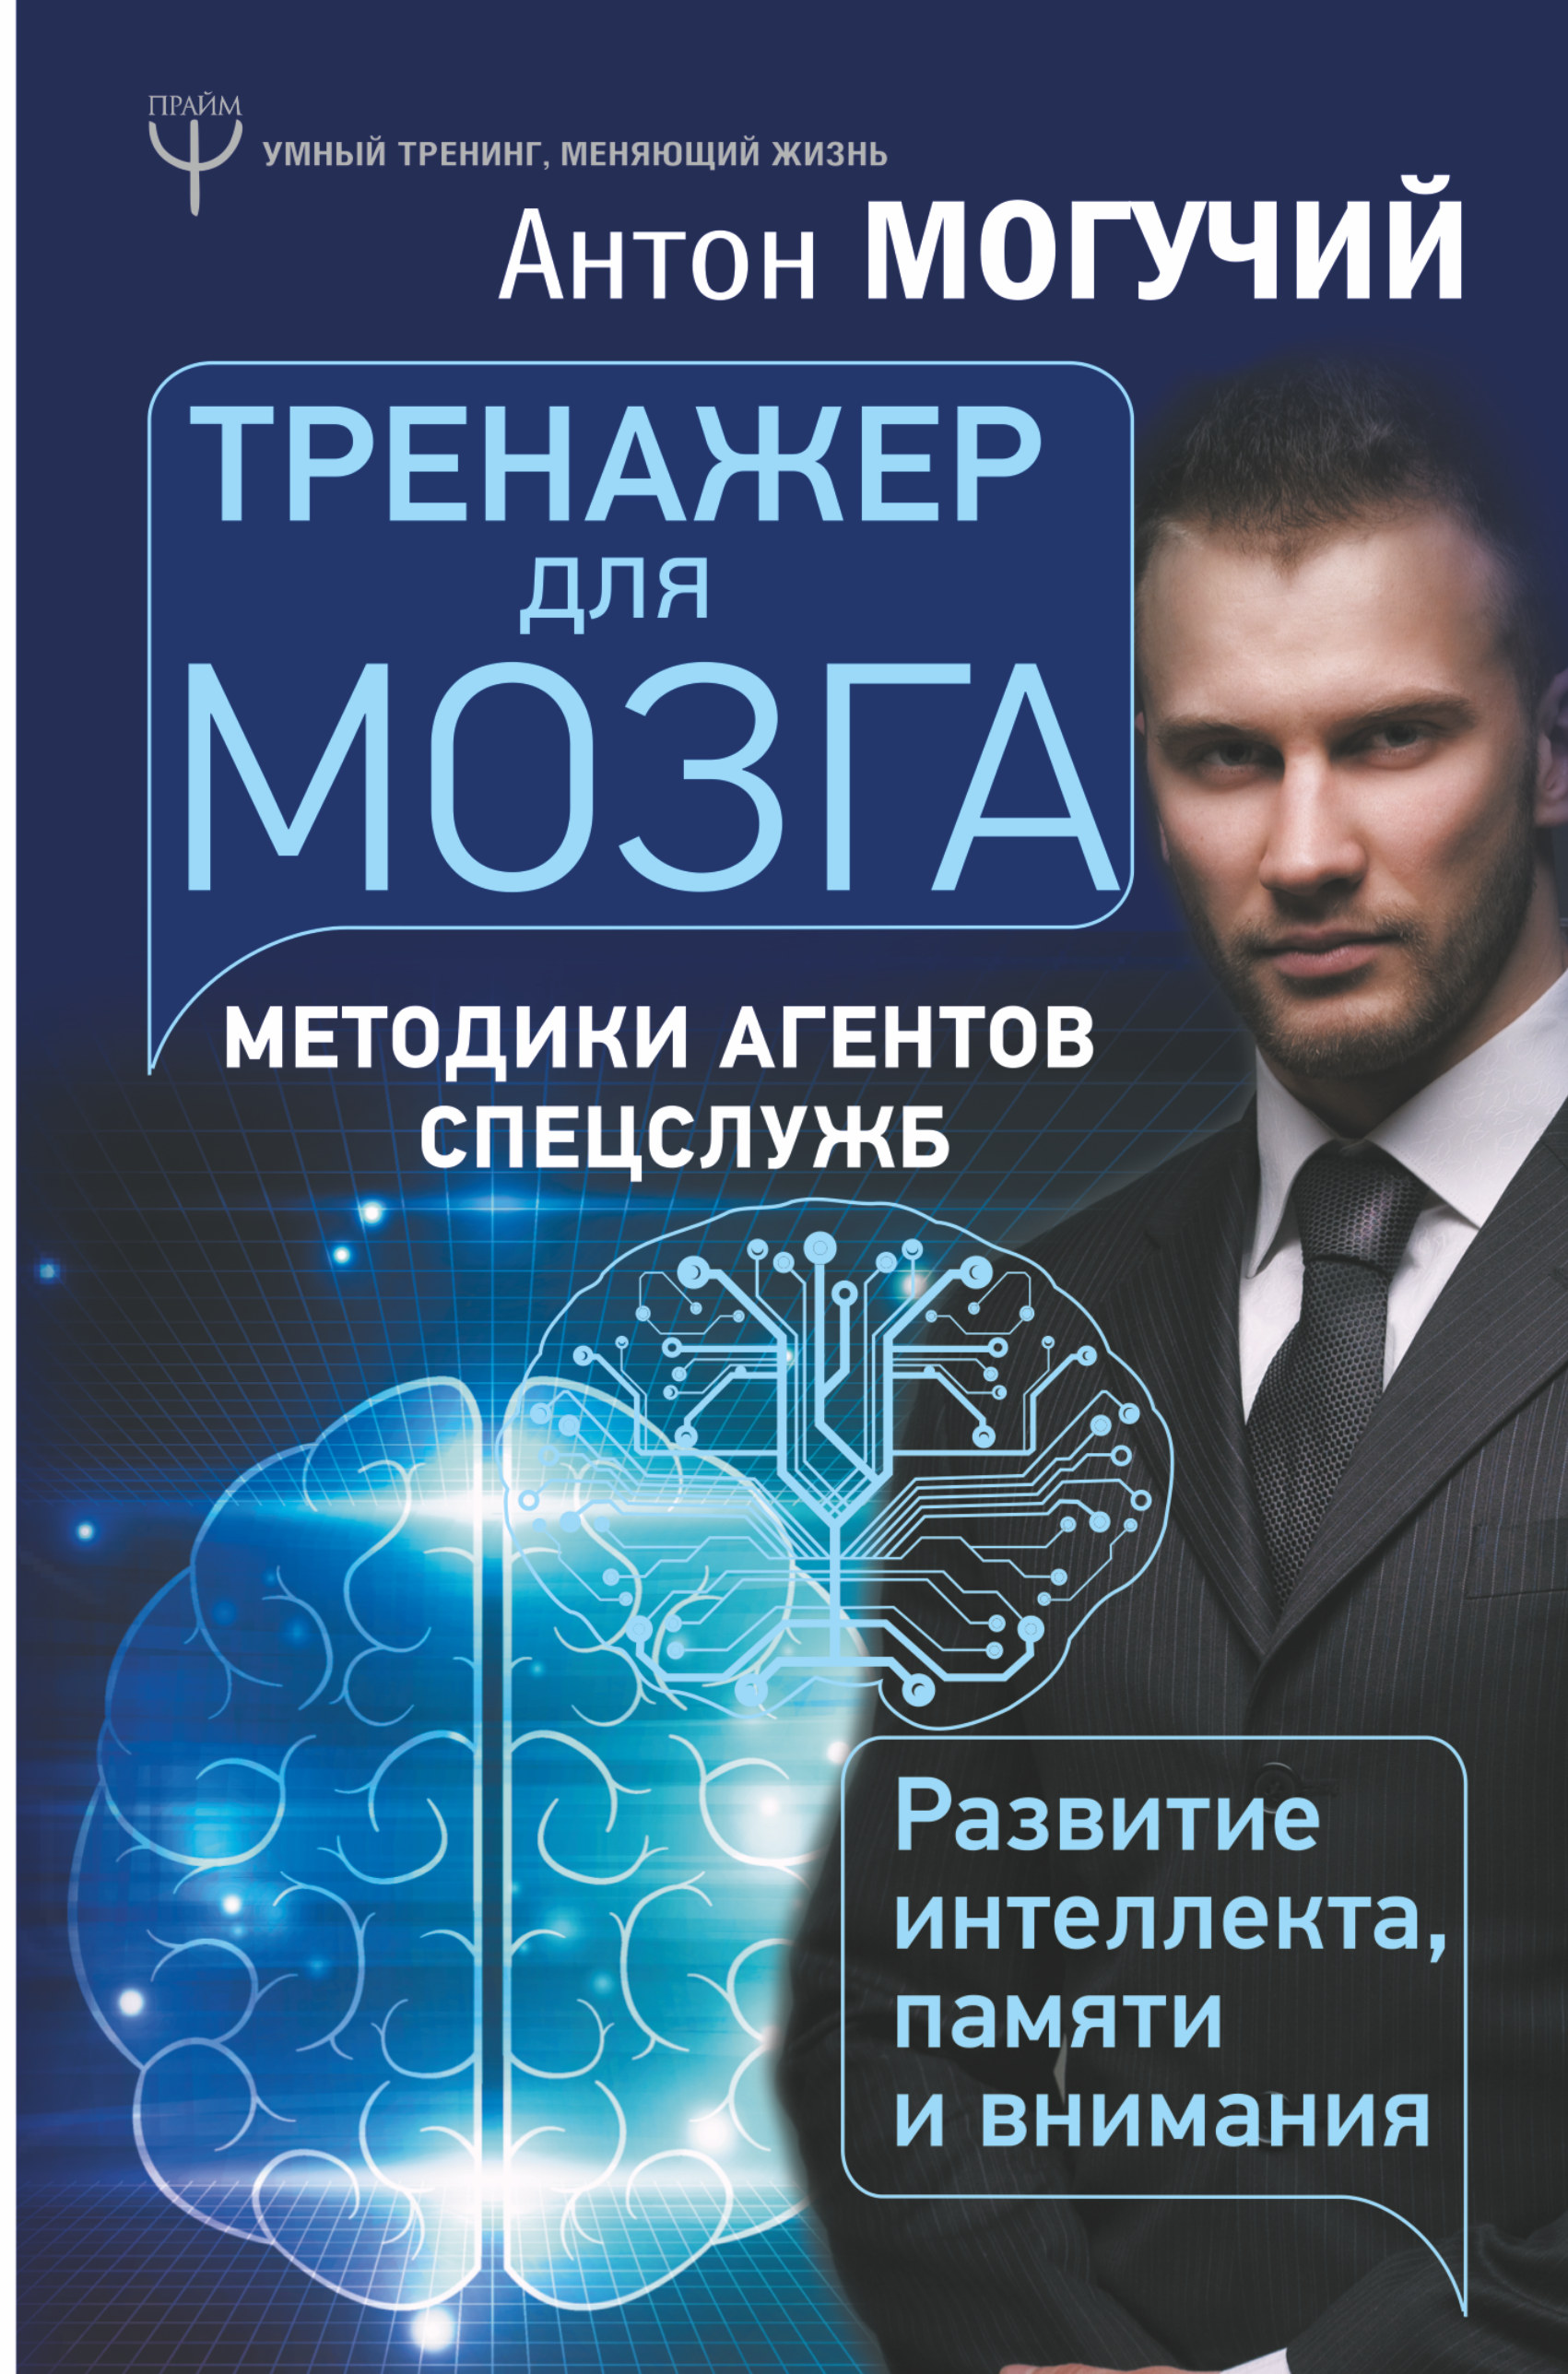 Память методика спецслужб. Книга мозг. Книжка тренажер для мозга.